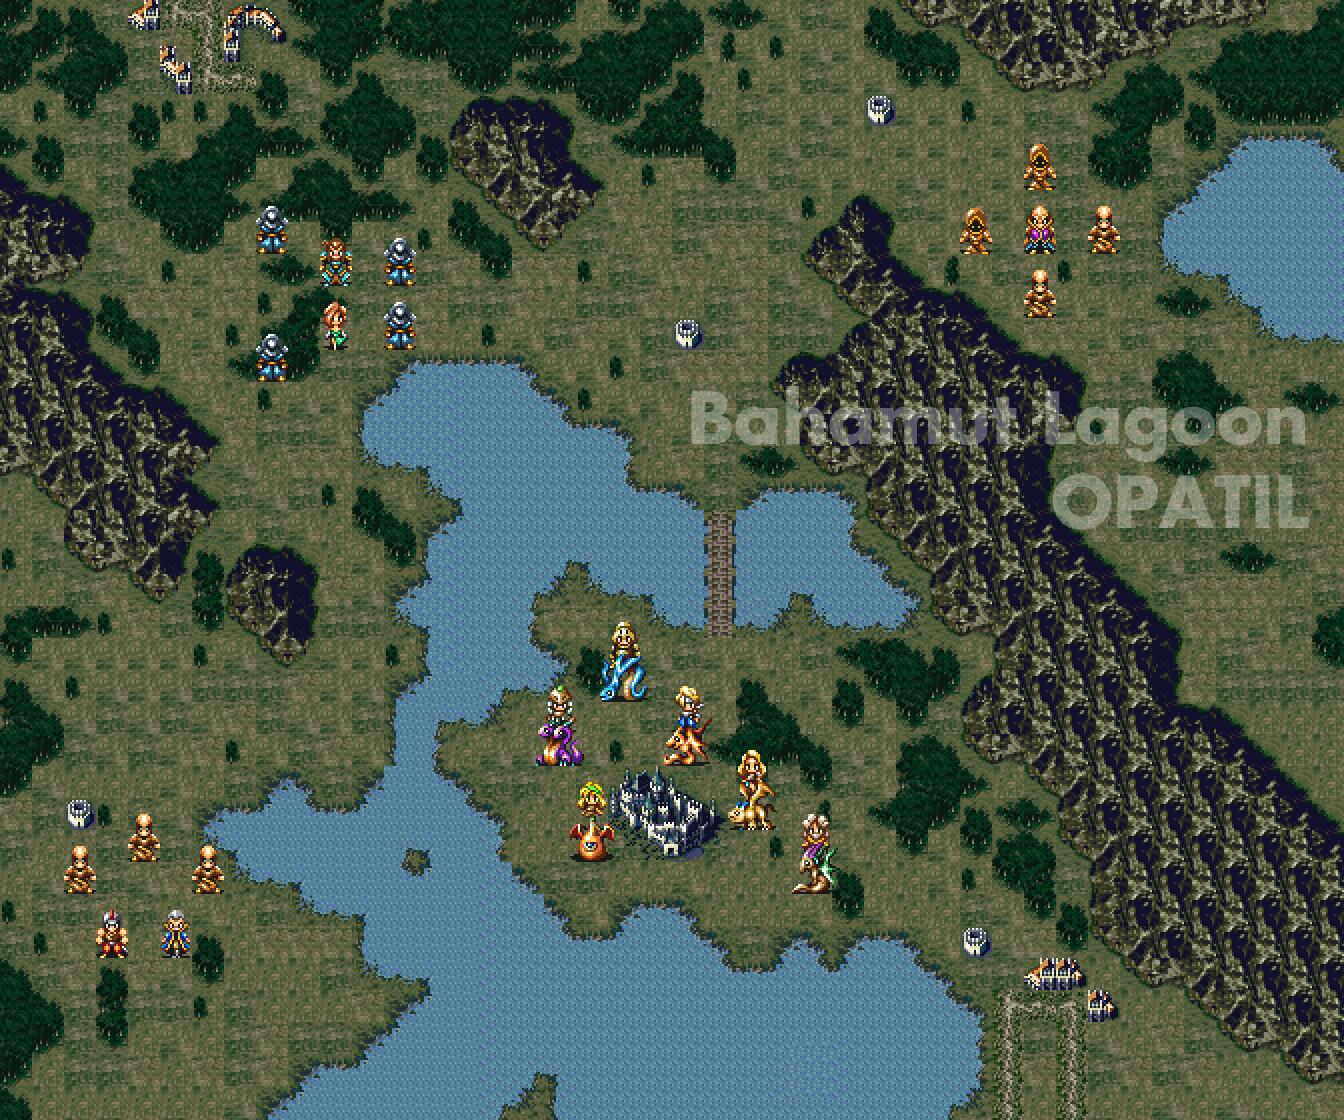 Bahamut Lagoon／バハムートラグーン 攻略：19章戦闘用マップ画像